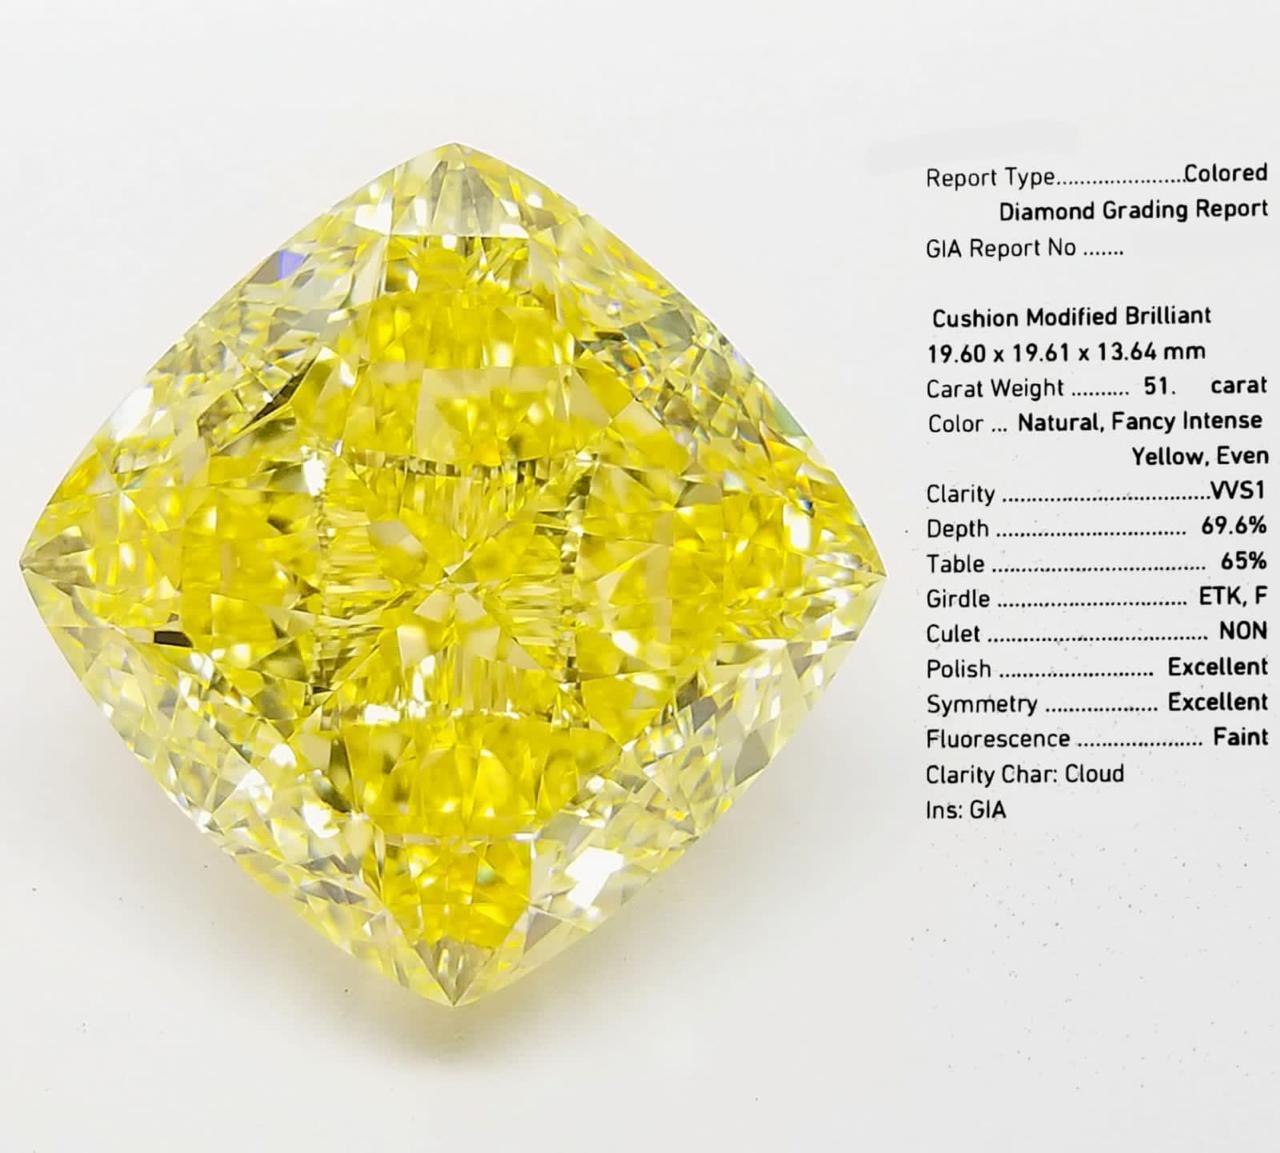 Cushion Cut GIA Certified 51.00 Carat Natural Fancy Intense Yellow Diamond  For Sale